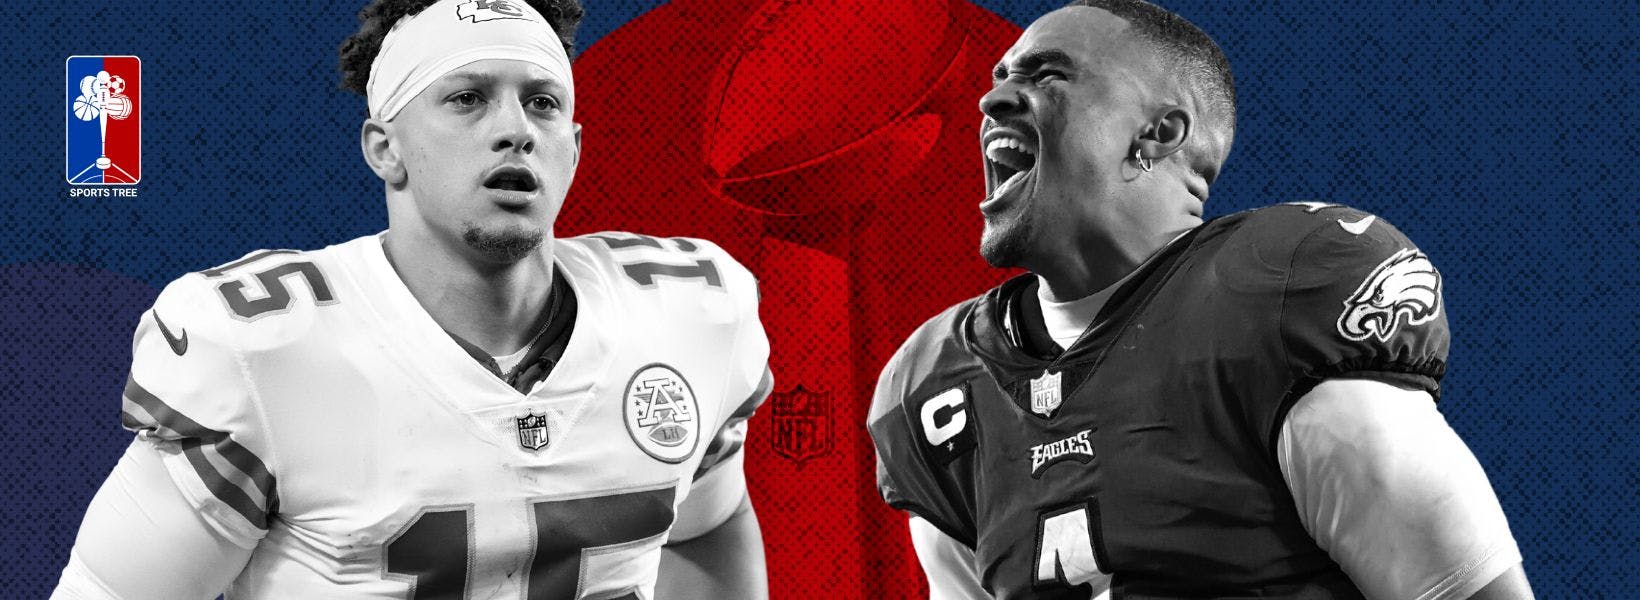 Mahomes and Hurts headline the first-ever Super Bowl encounter between starting Black quarterbacks